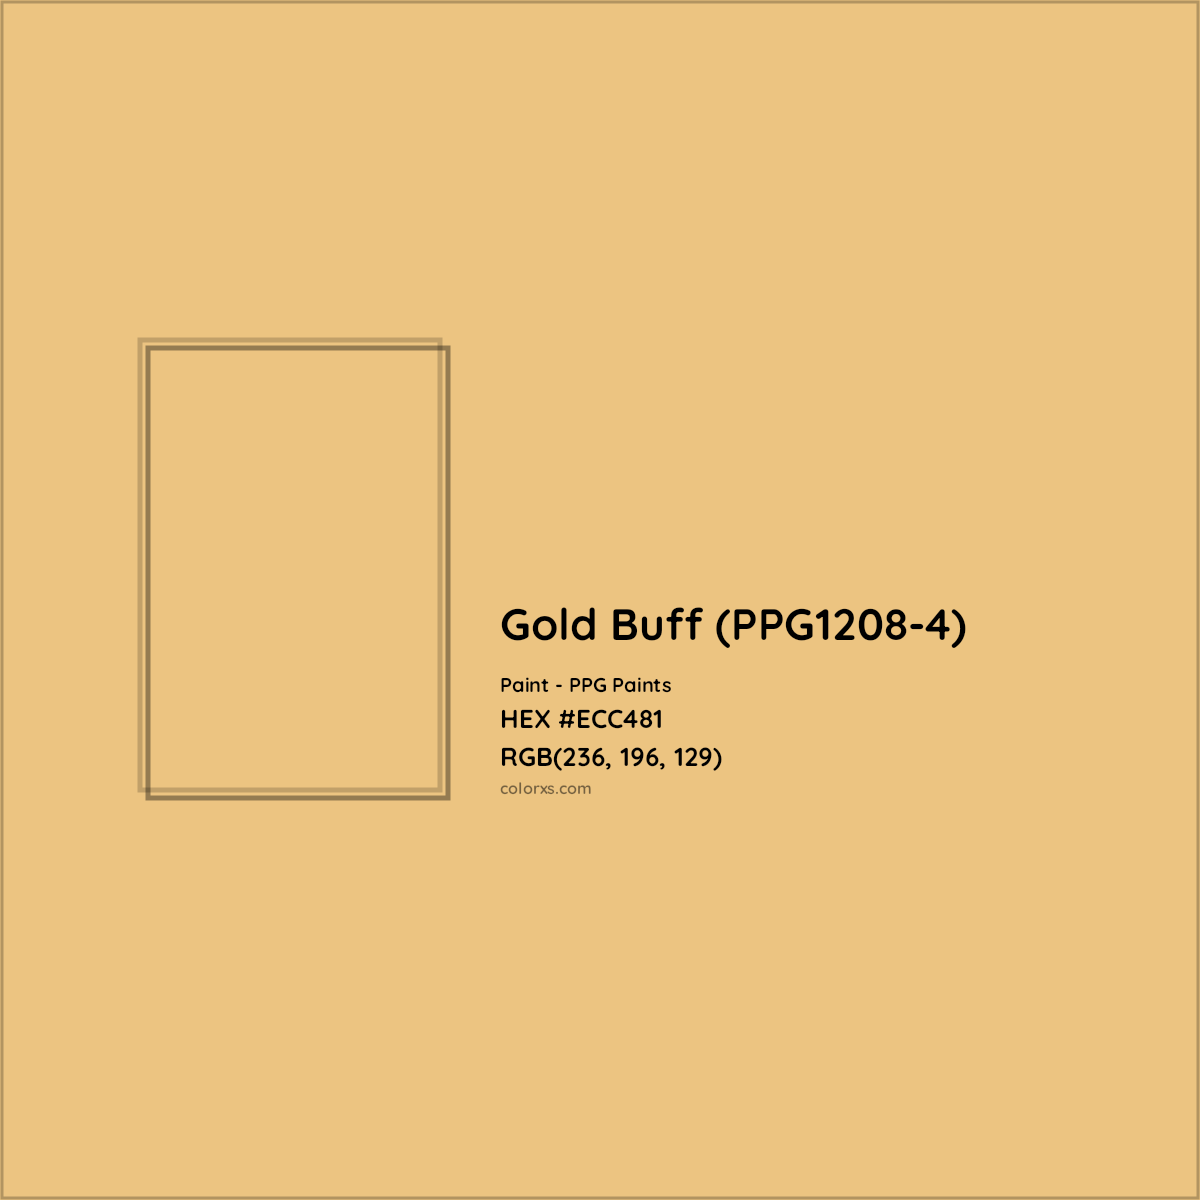 Ppg Paints Gold Buff Ppg1208 4 Paint Color Codes Similar Paints And